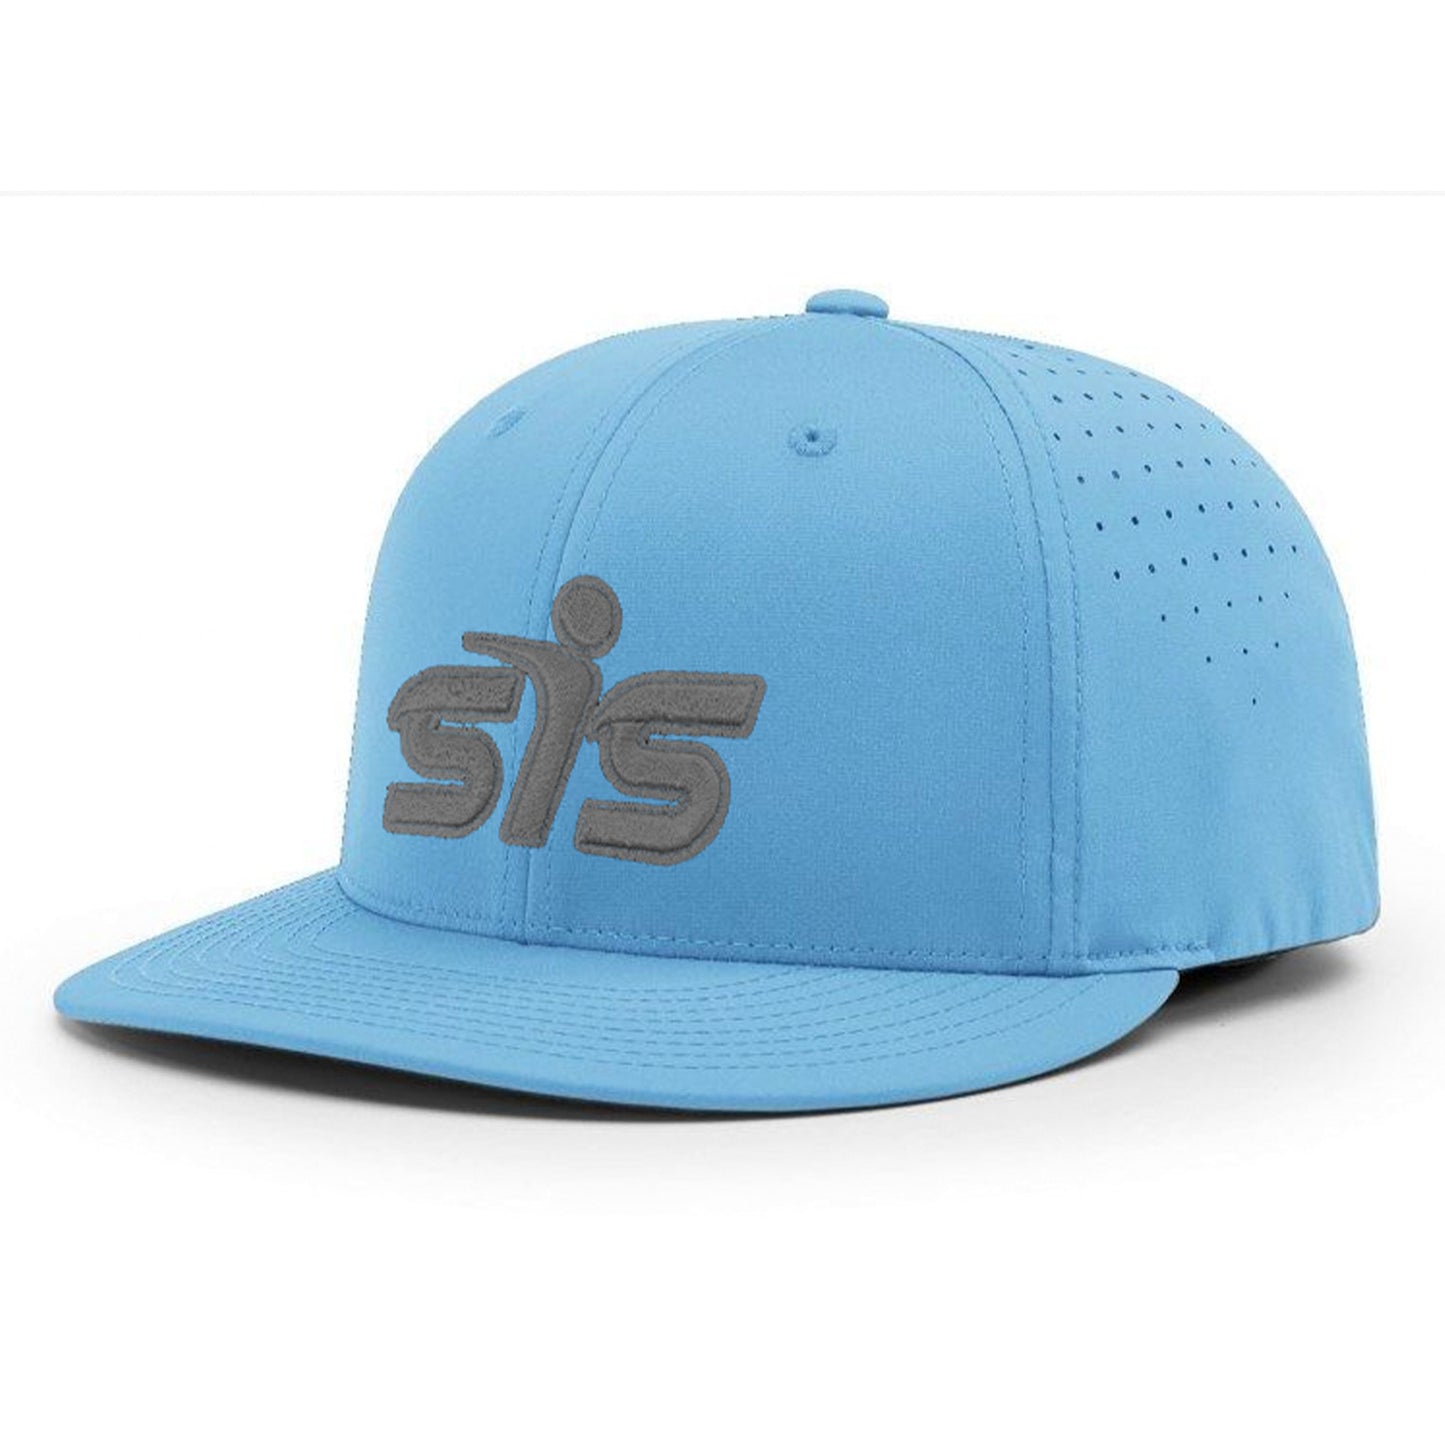 Smash It Sports CA i8503 Performance Hat - New Logo - Carolina/Charcoal